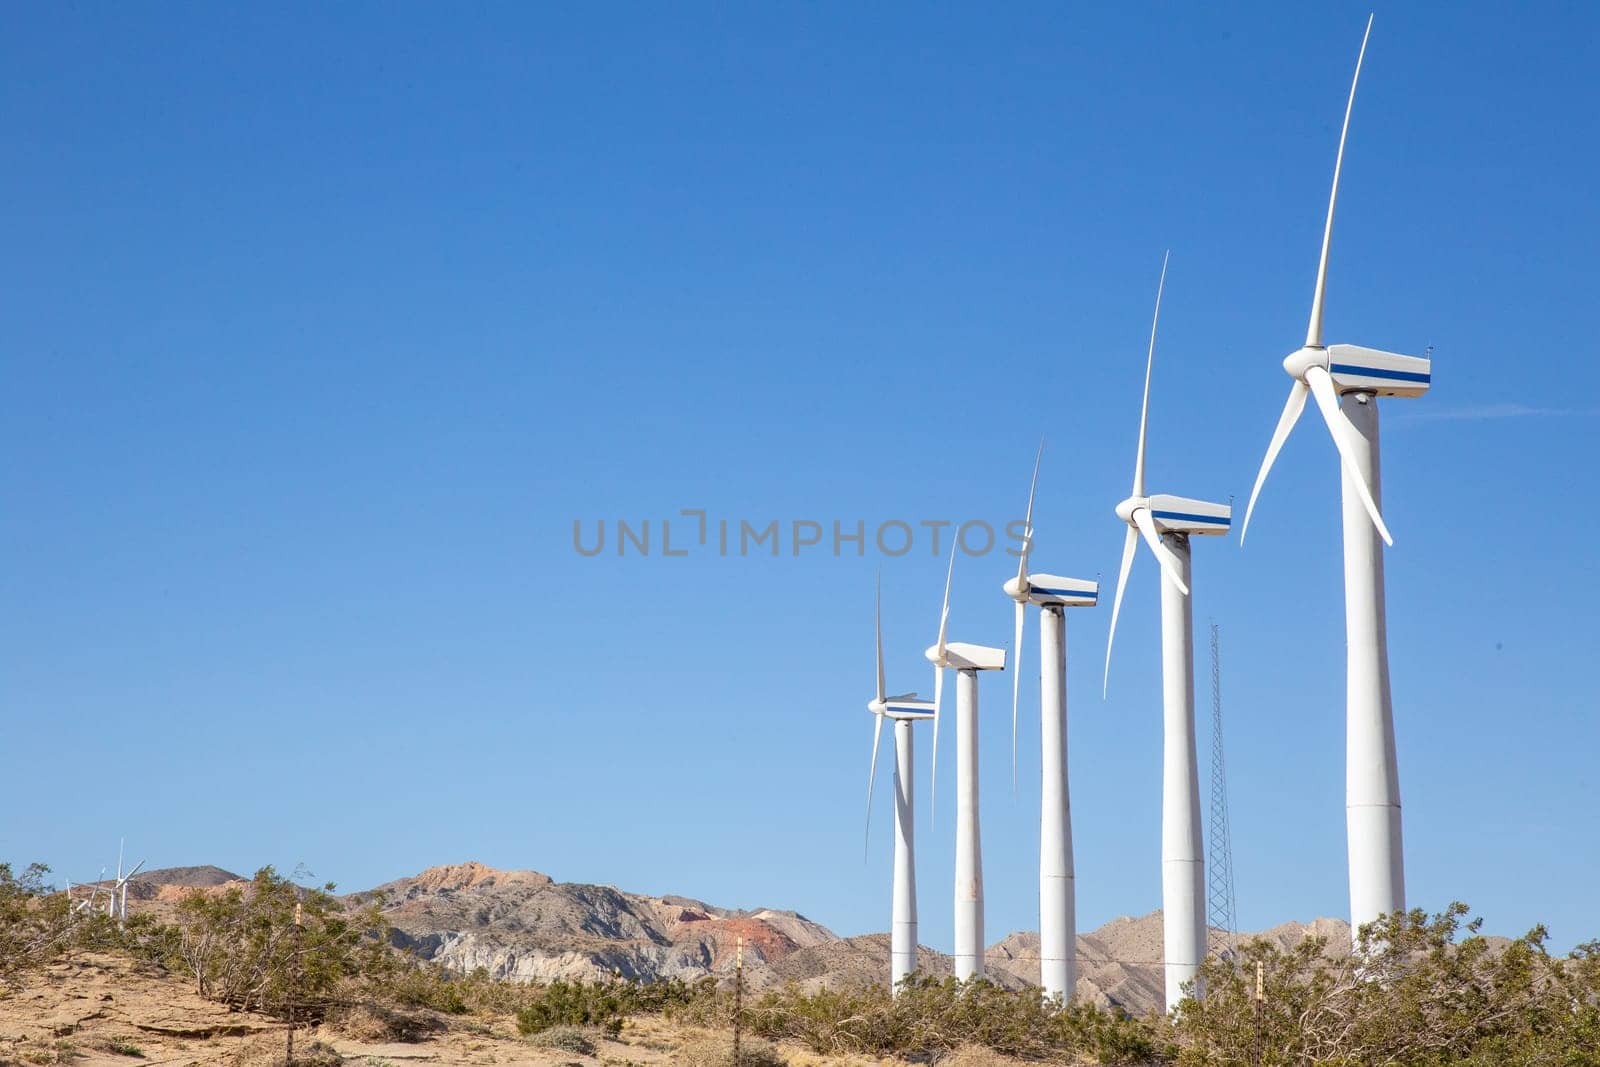 Row of wind turbines in the desert